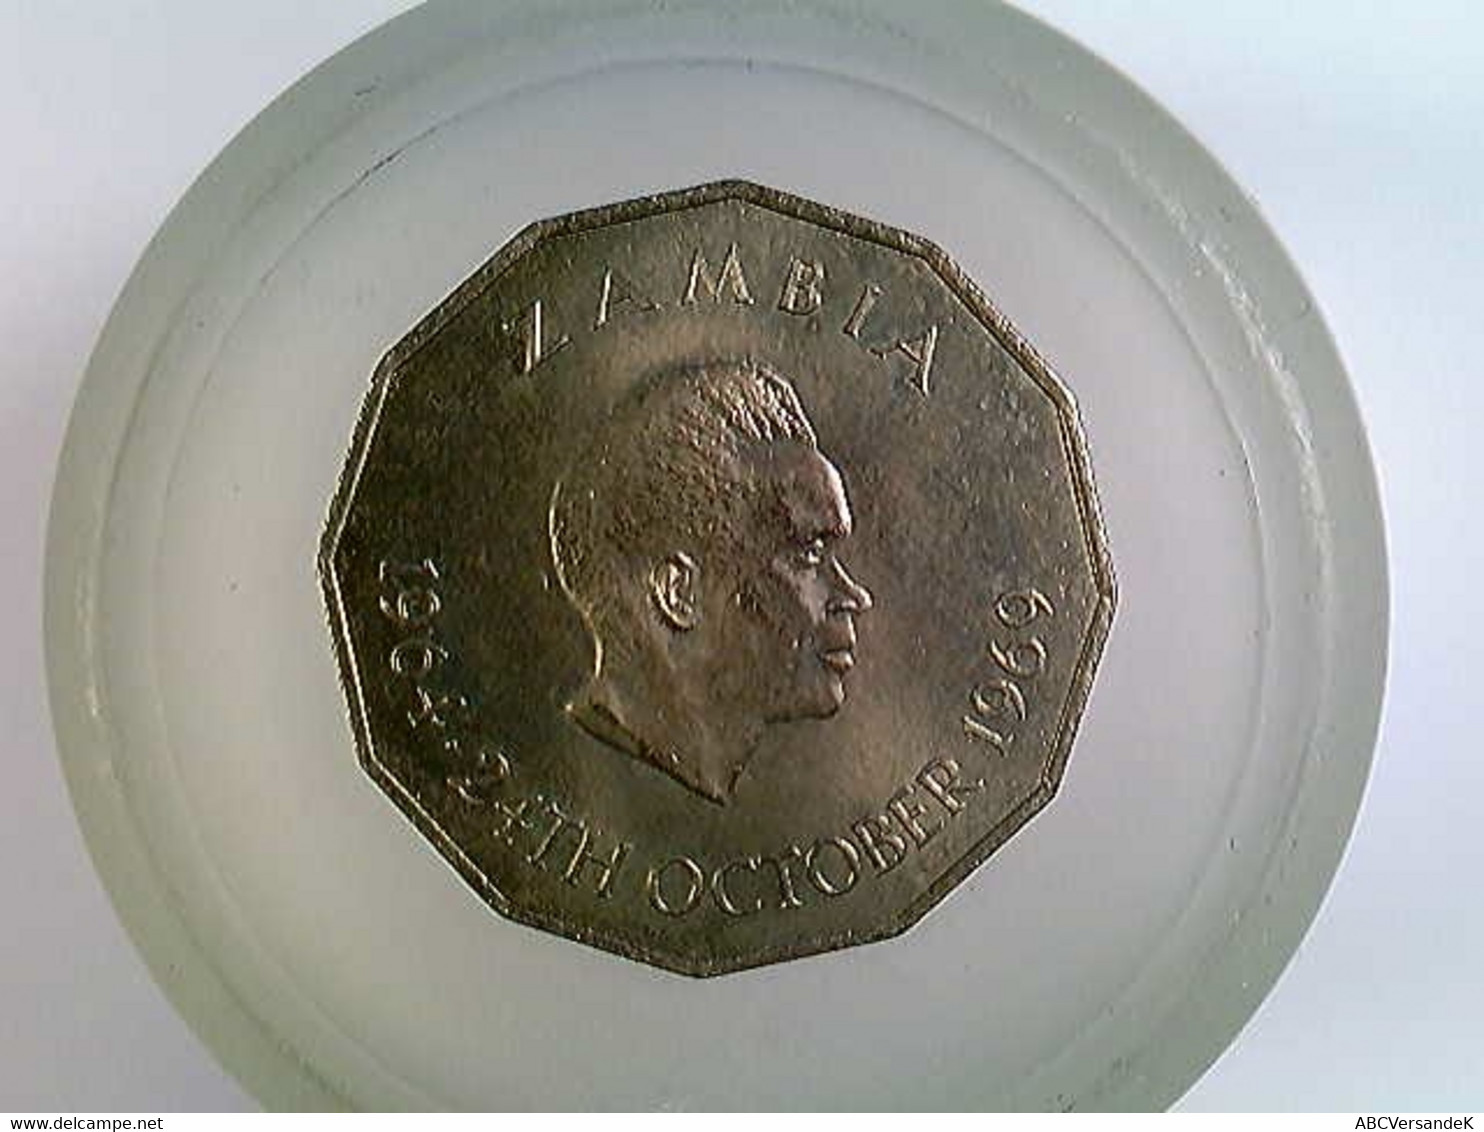 Münze Zambia, 50 Ngwee 1969, FAO, TOP - Numismatik